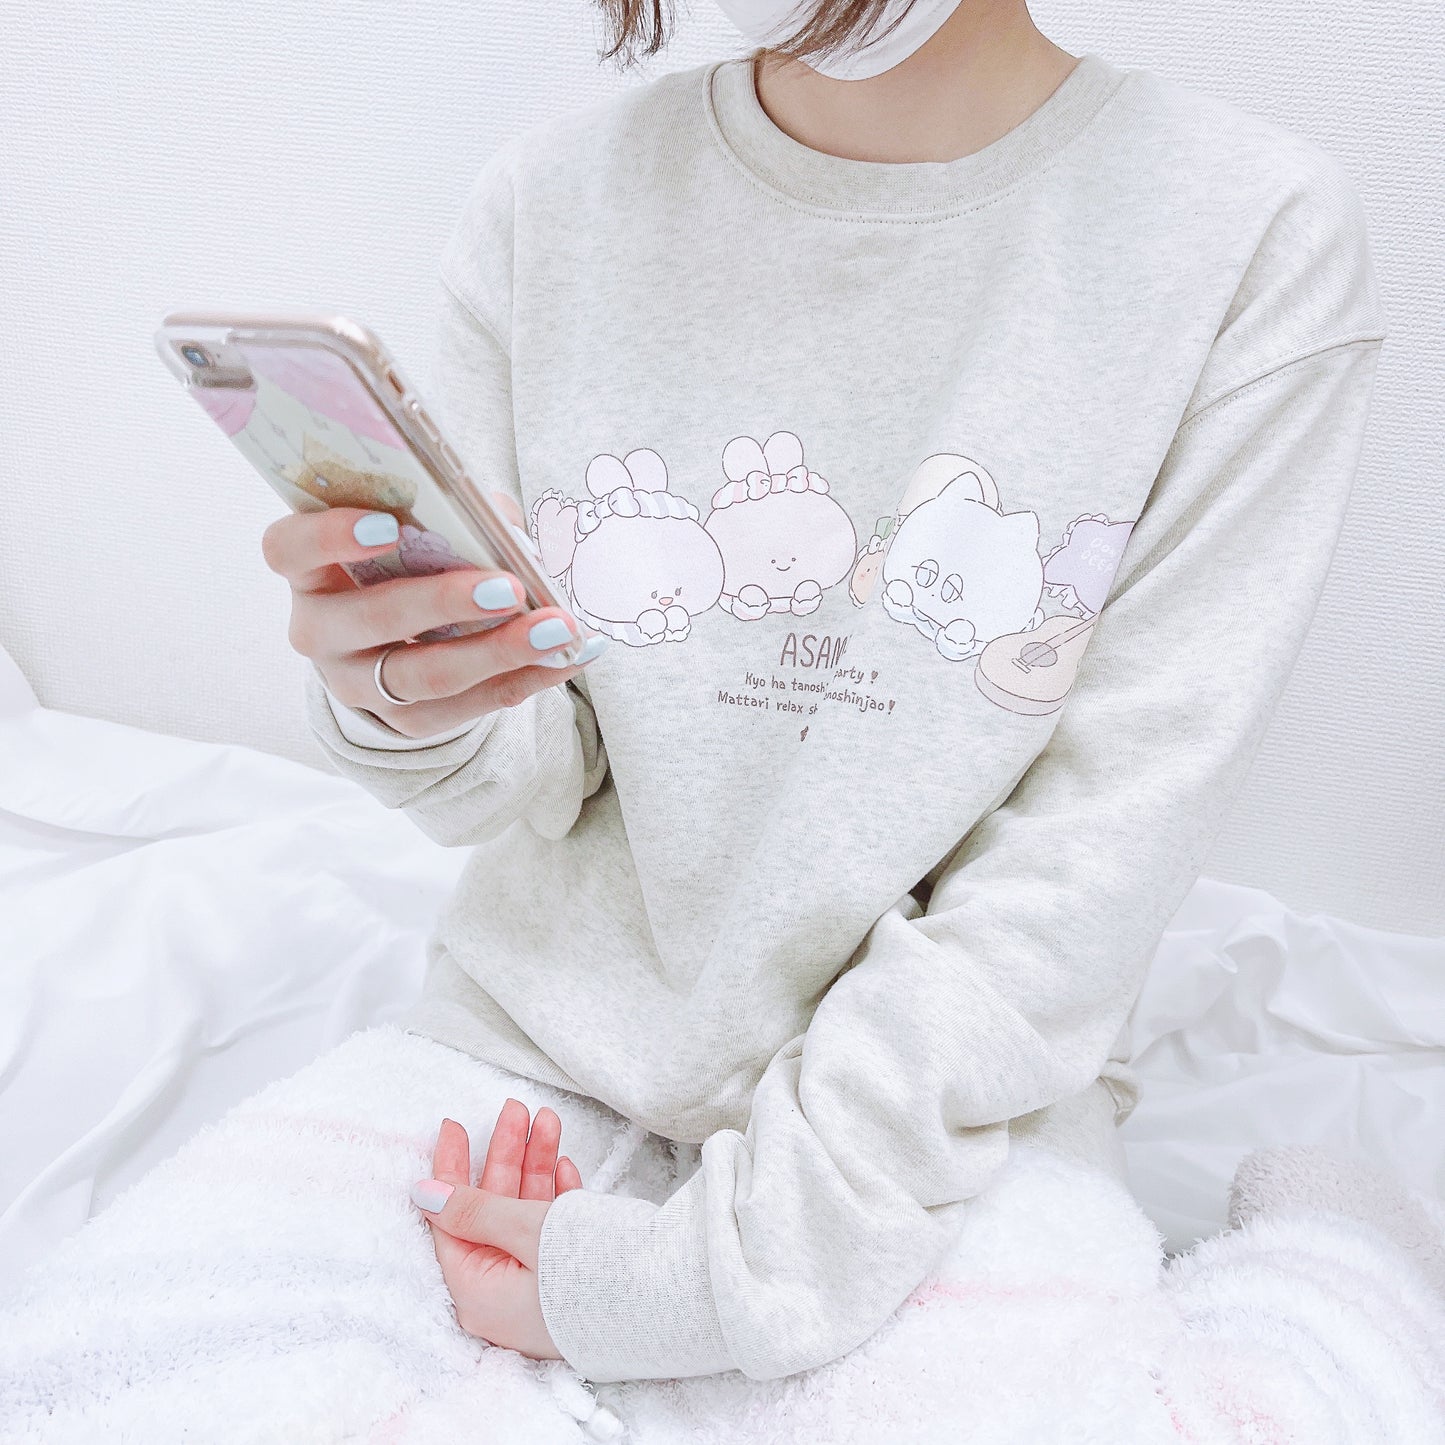 [Asamimi-chan] Sweatshirt (pajama party) [shipped in early October]